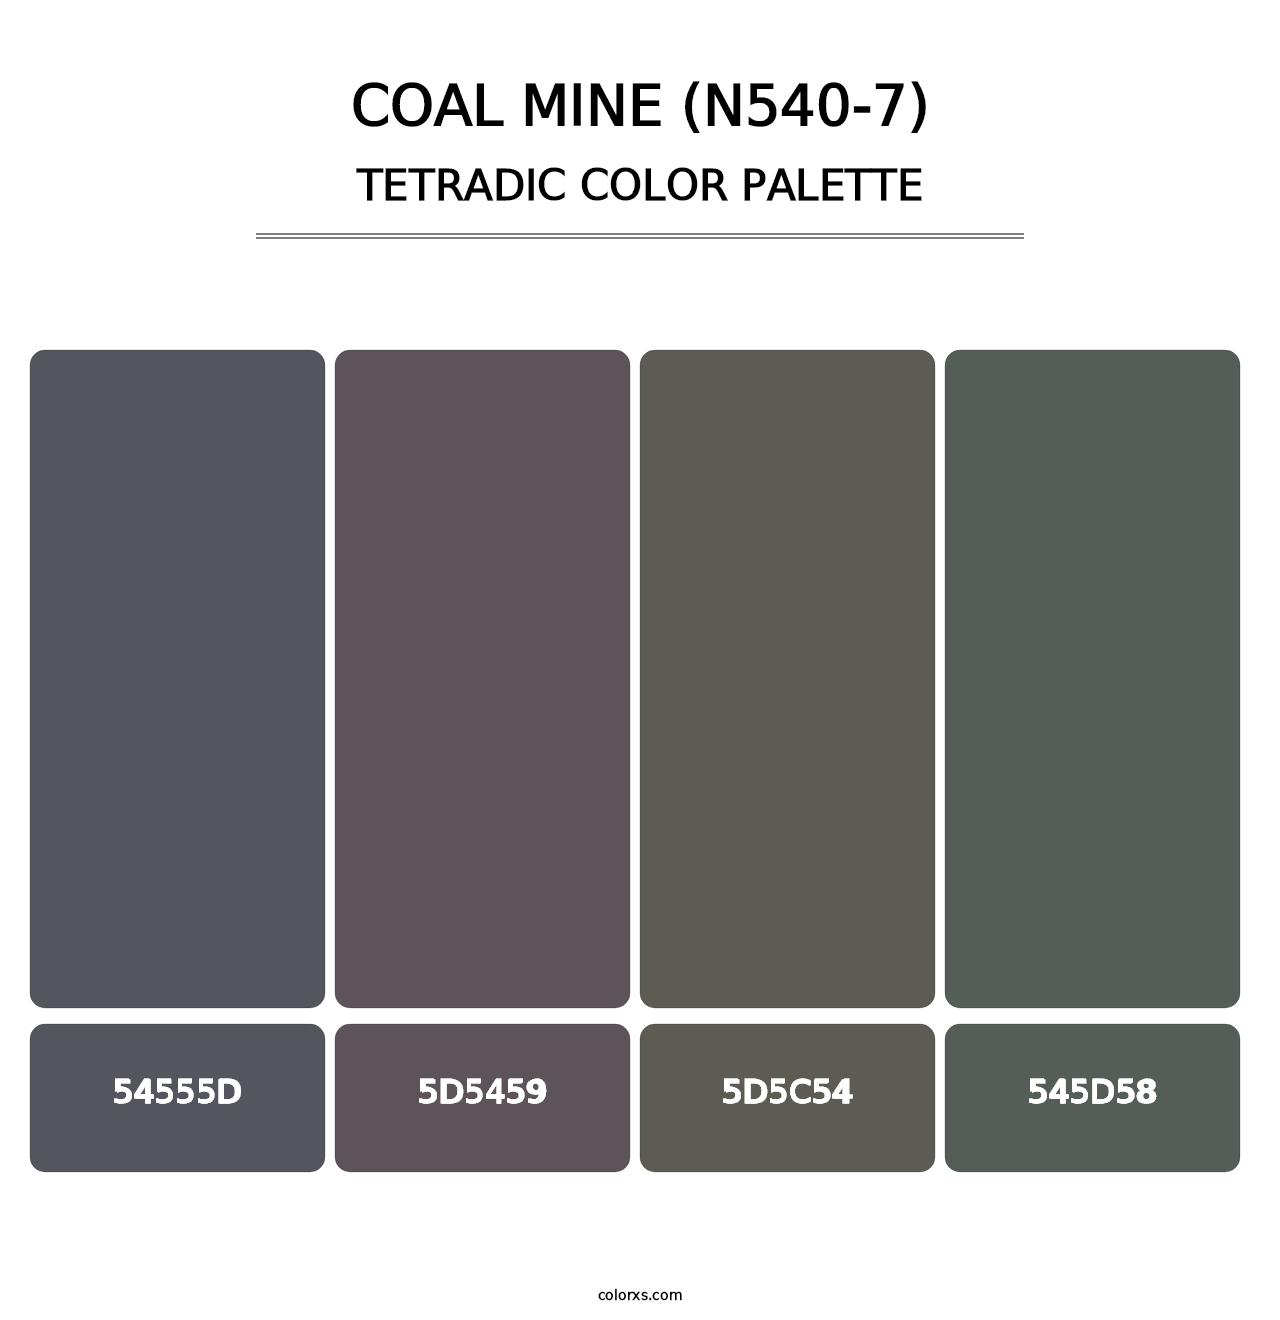 Coal Mine (N540-7) - Tetradic Color Palette